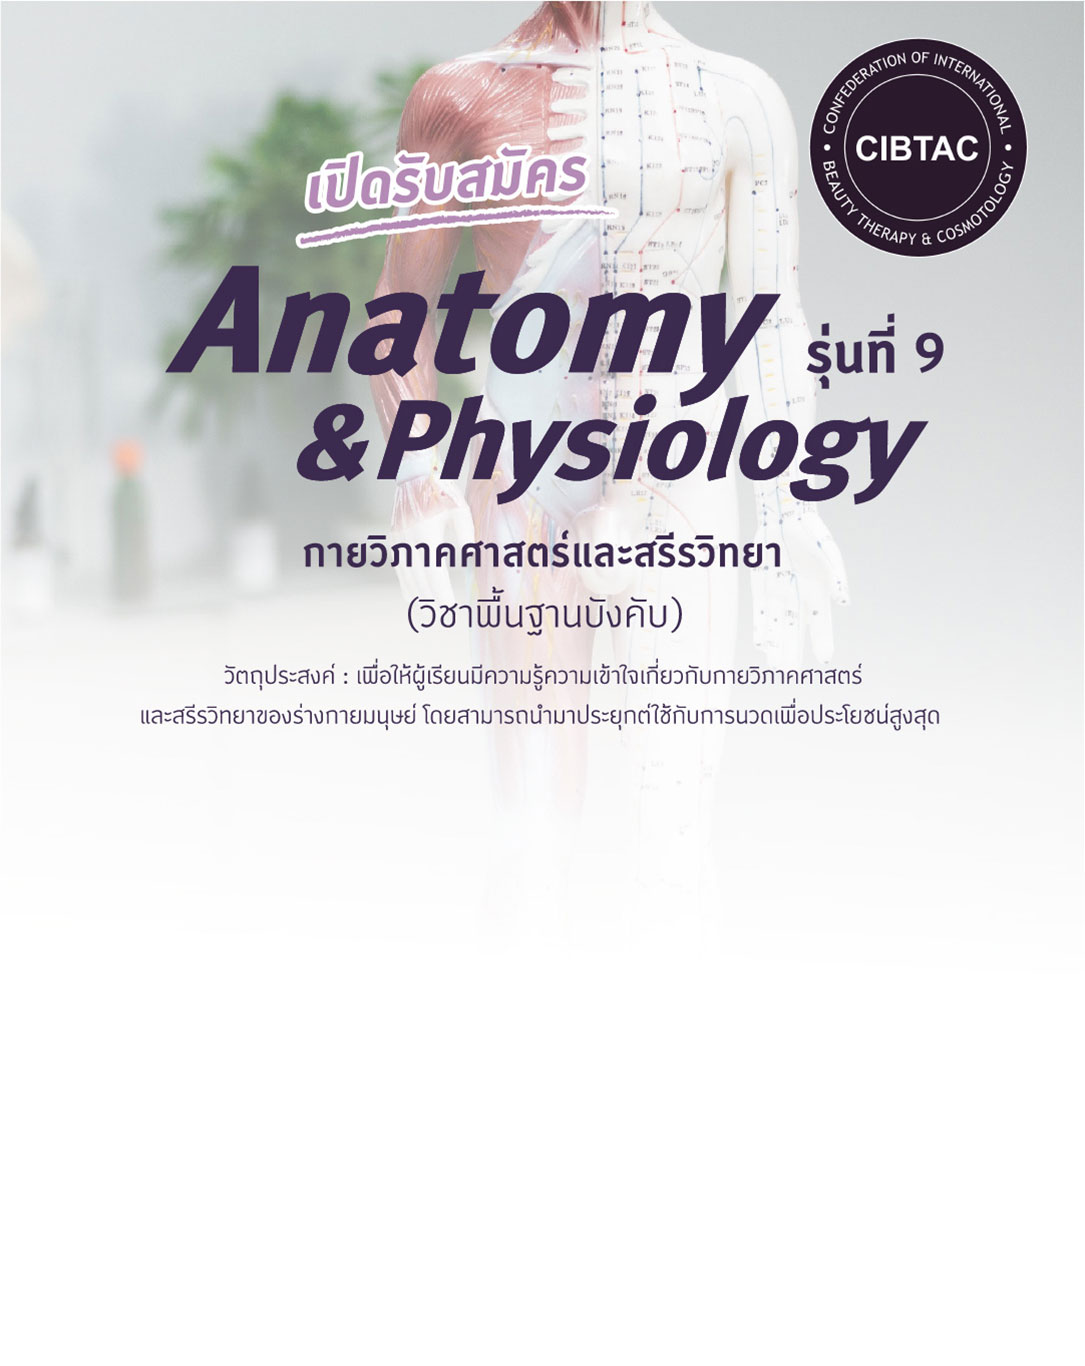 herobanner mobile - Anatomy, Physiology, กายวิภาคศาสตร์, สรีรวิทยา, กายวิภาคศาสตร์และสรีรวิทยา, ร้านสปา, ร้านนวด, Therapist, ครูสอนโยคะ, โยคะ, เทรนเนอร์ออกกำลังกาย, เทรนเนอร์, วิทยากร, สุขภาพและความงาม, สุขภาพ, ความงาม, สุขภาพ, Body, Massage, Body Massage, ร้านสปา, ร้านนวด, Therapist